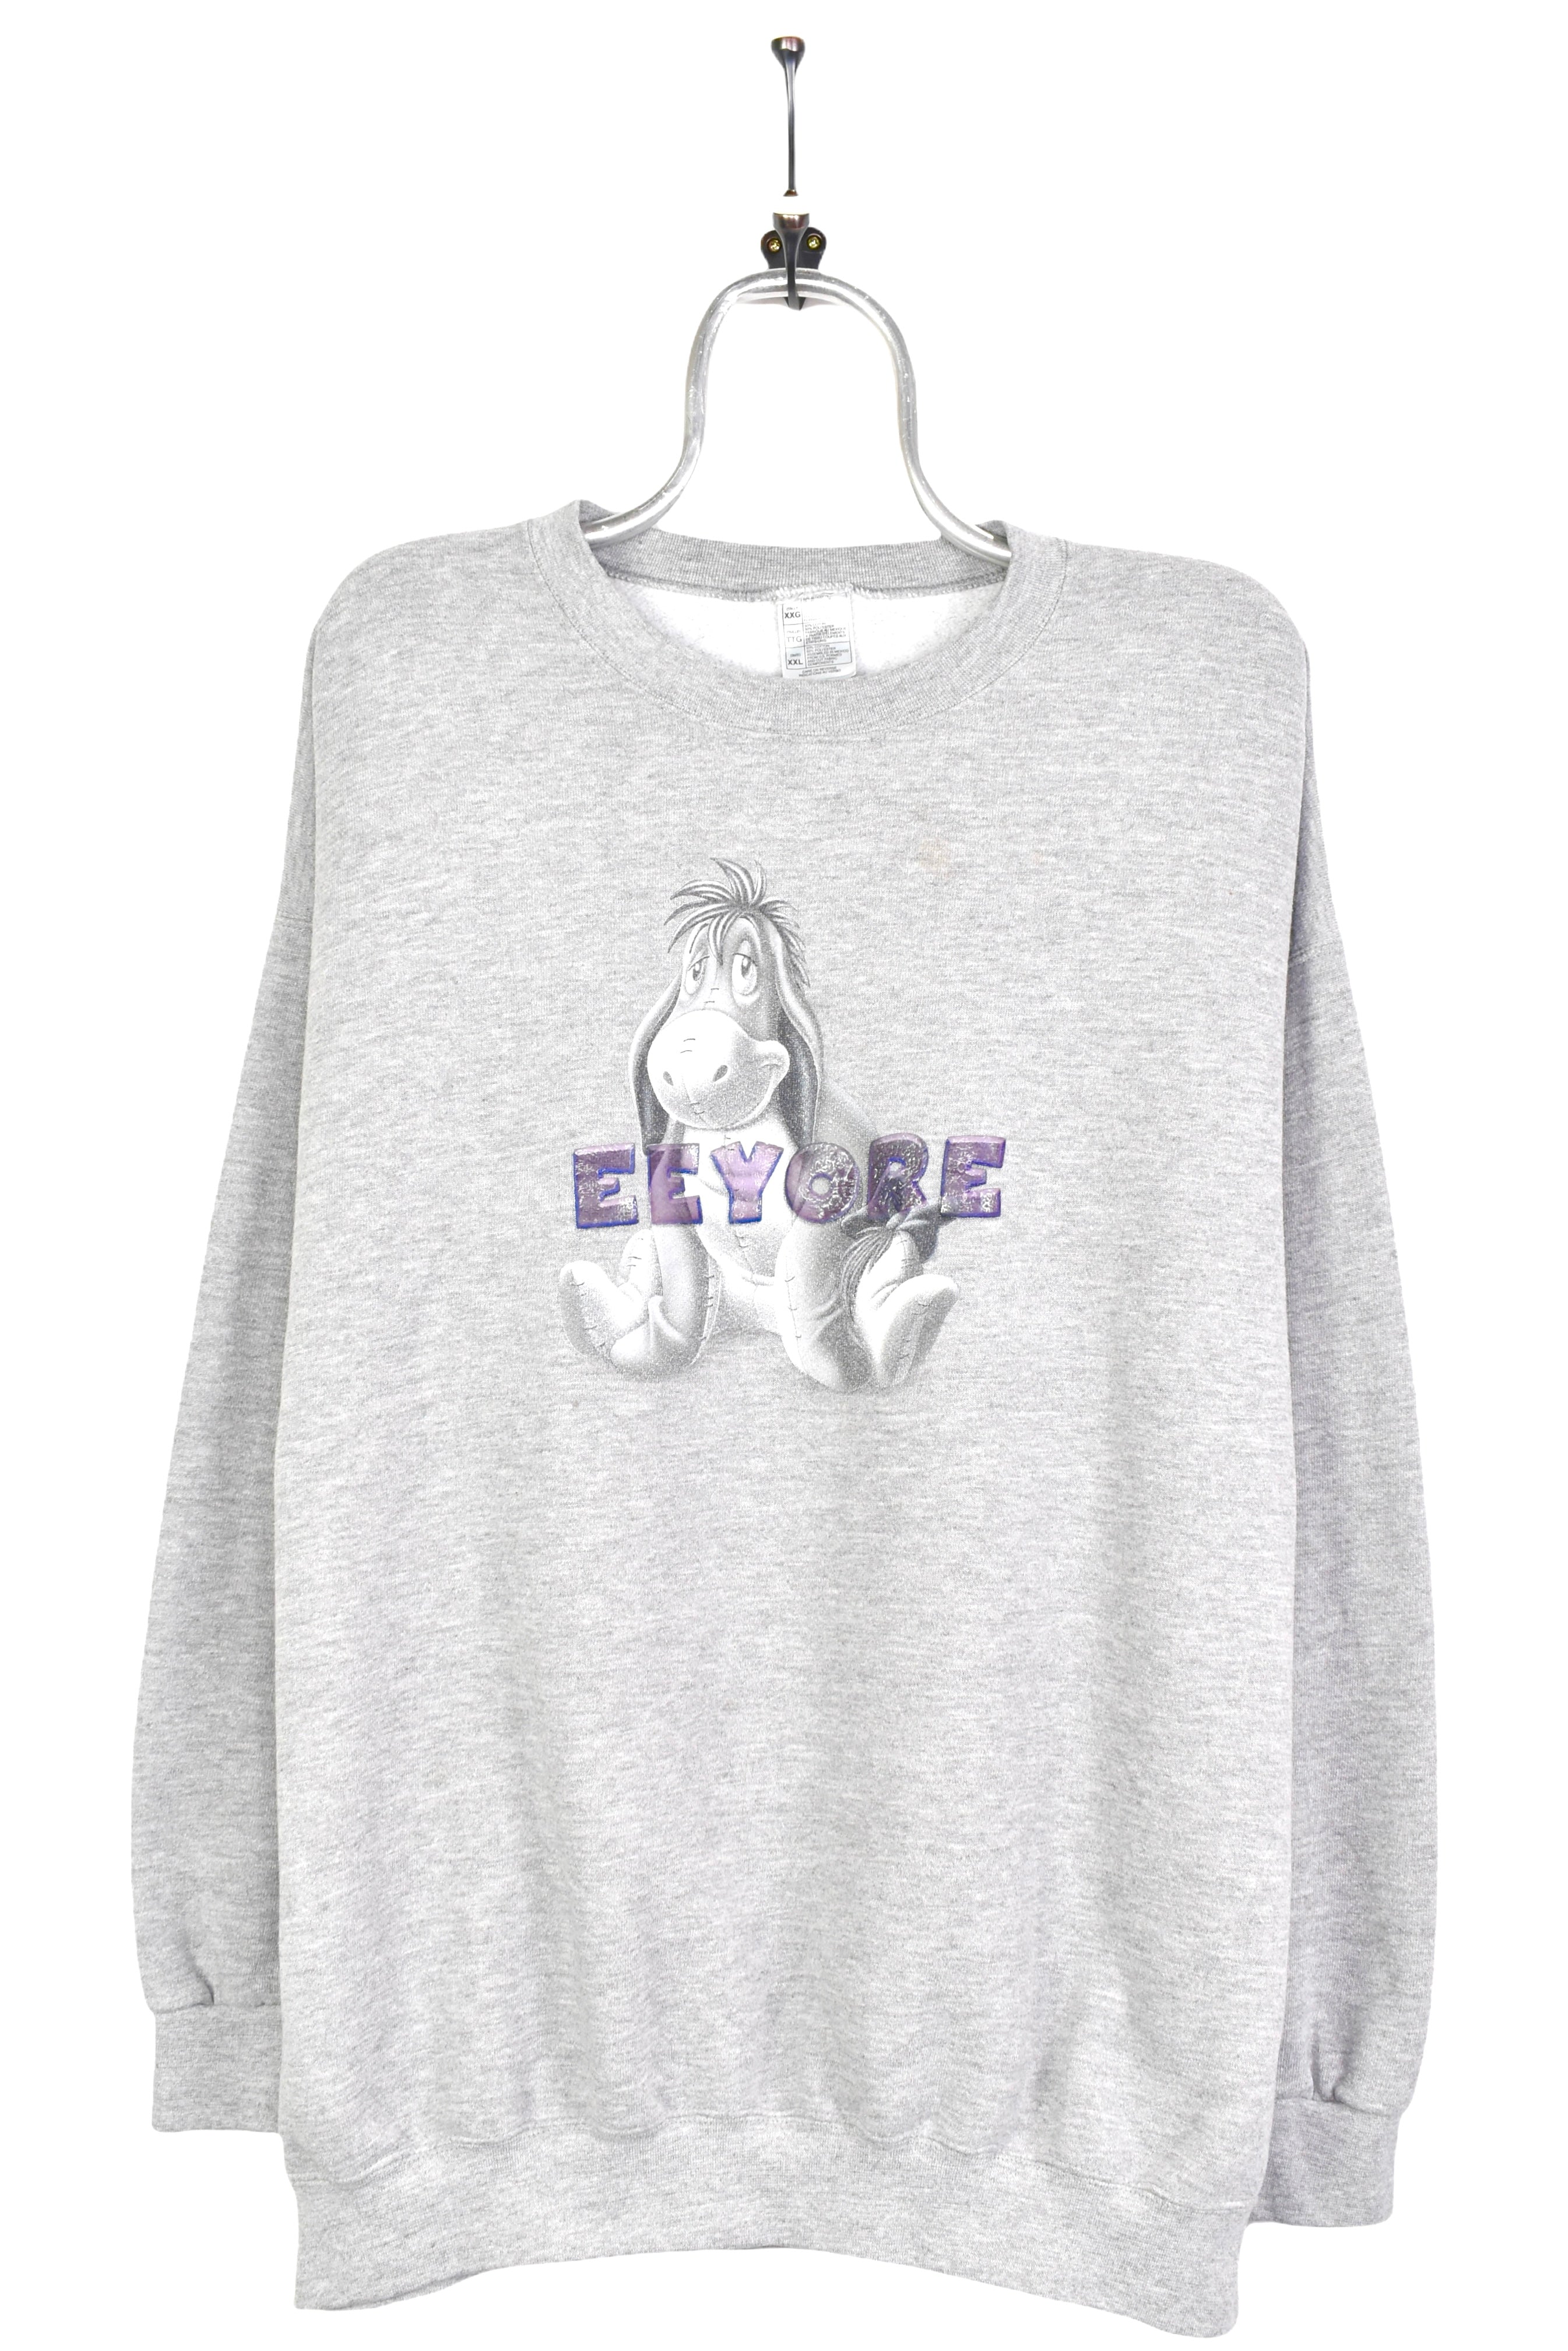 Vintage Disney Eeyore grey sweatshirt | XXL DISNEY / CARTOON